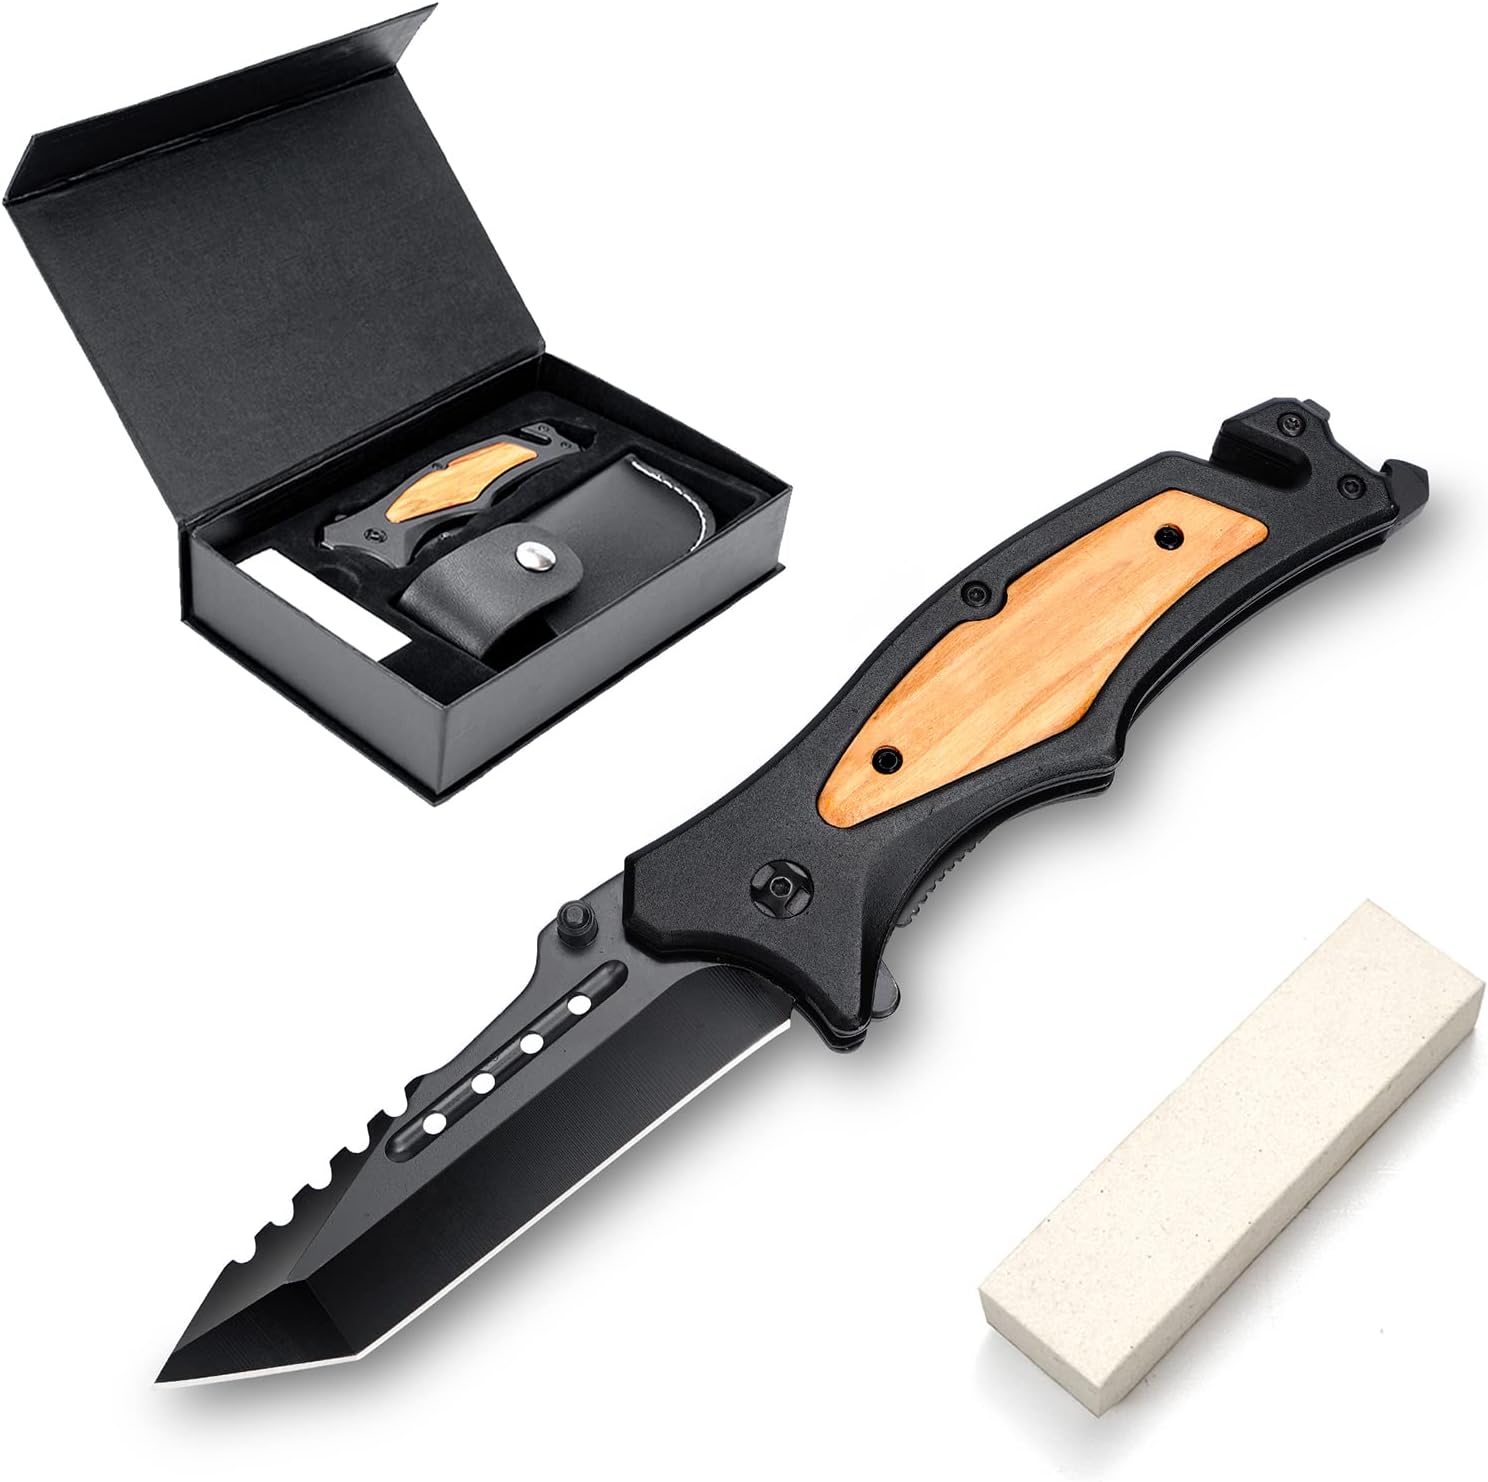 GVDV Pocket Knife Folding Knives - 5 in 1 Utility Knife for Survival Camping Hunting Fishing, Christ